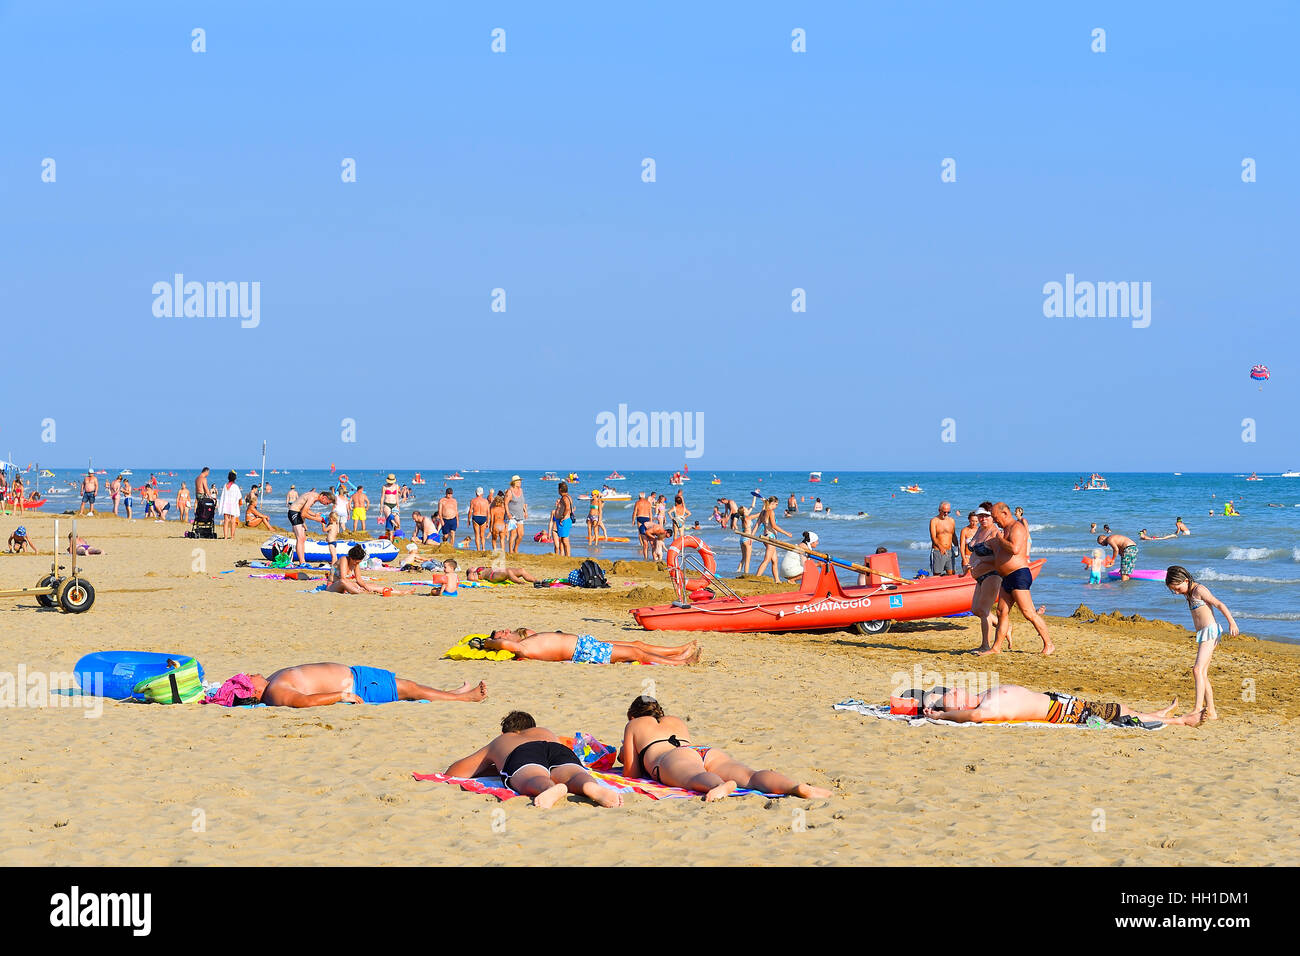 Bathers on a sandy beach, Bibione, Adriatic Sea, Veneto, Italy Stock Photo